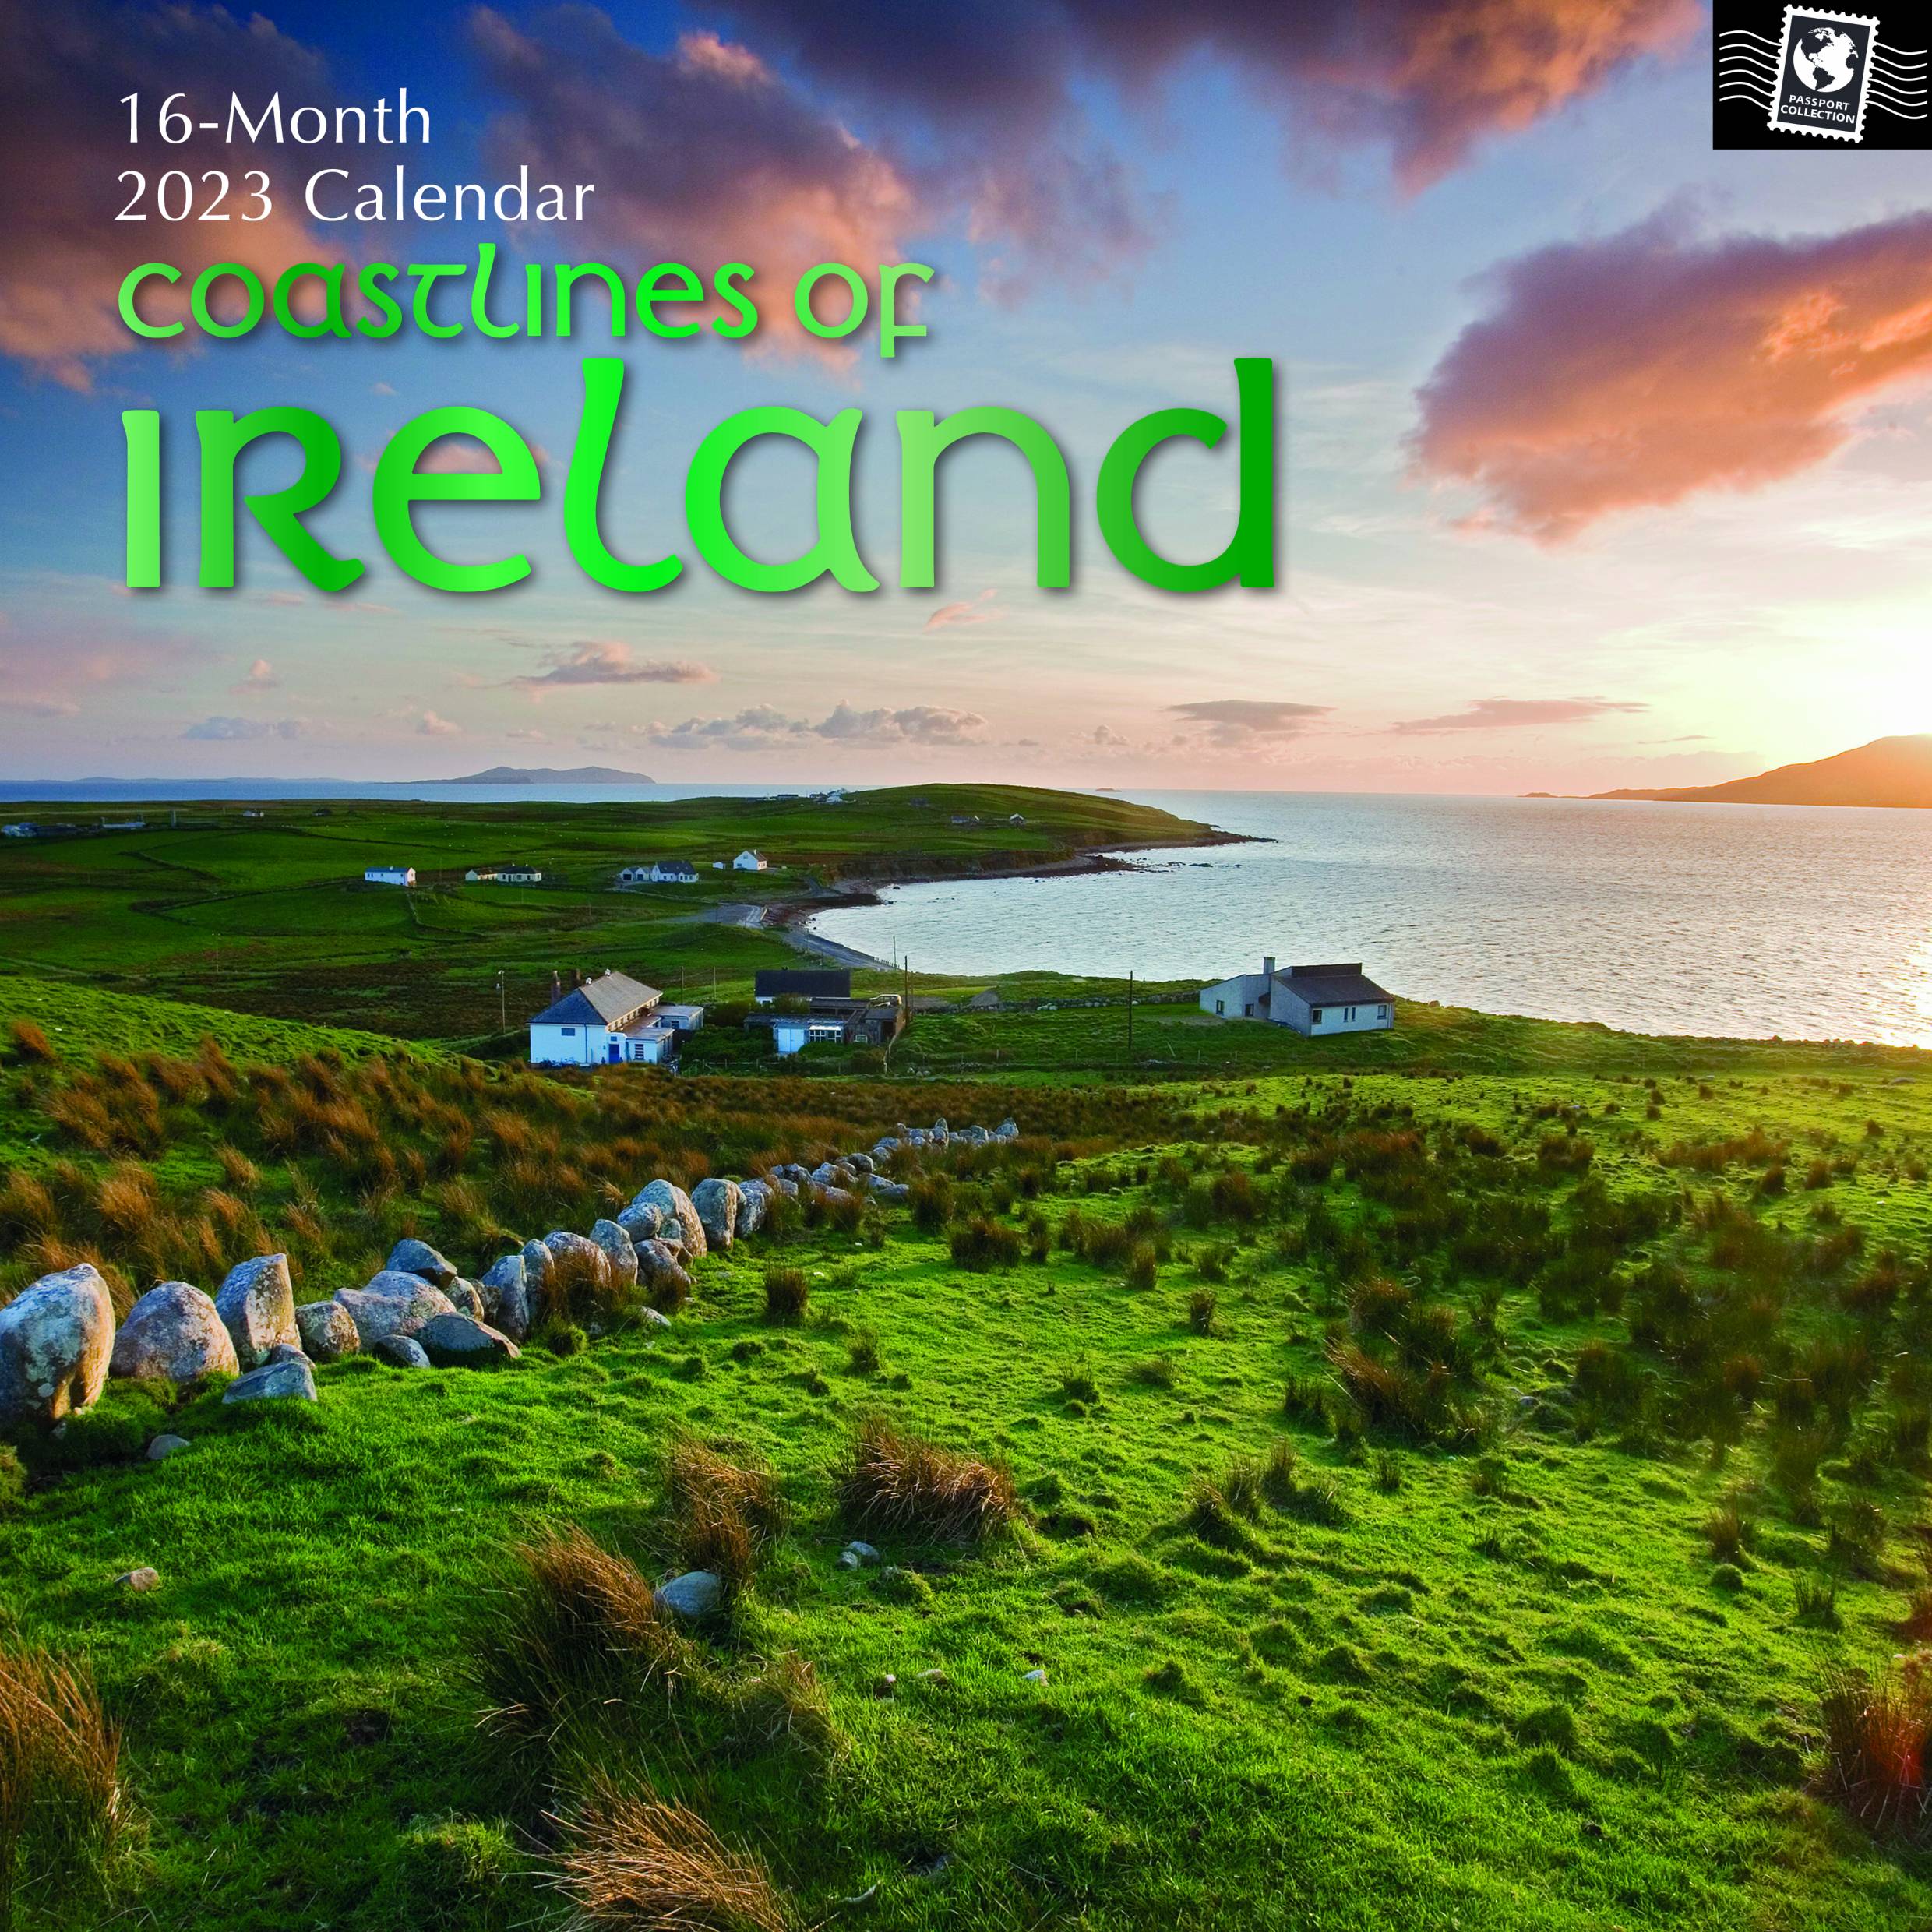 2023 Coastlines of Ireland - Square Wall Calendar